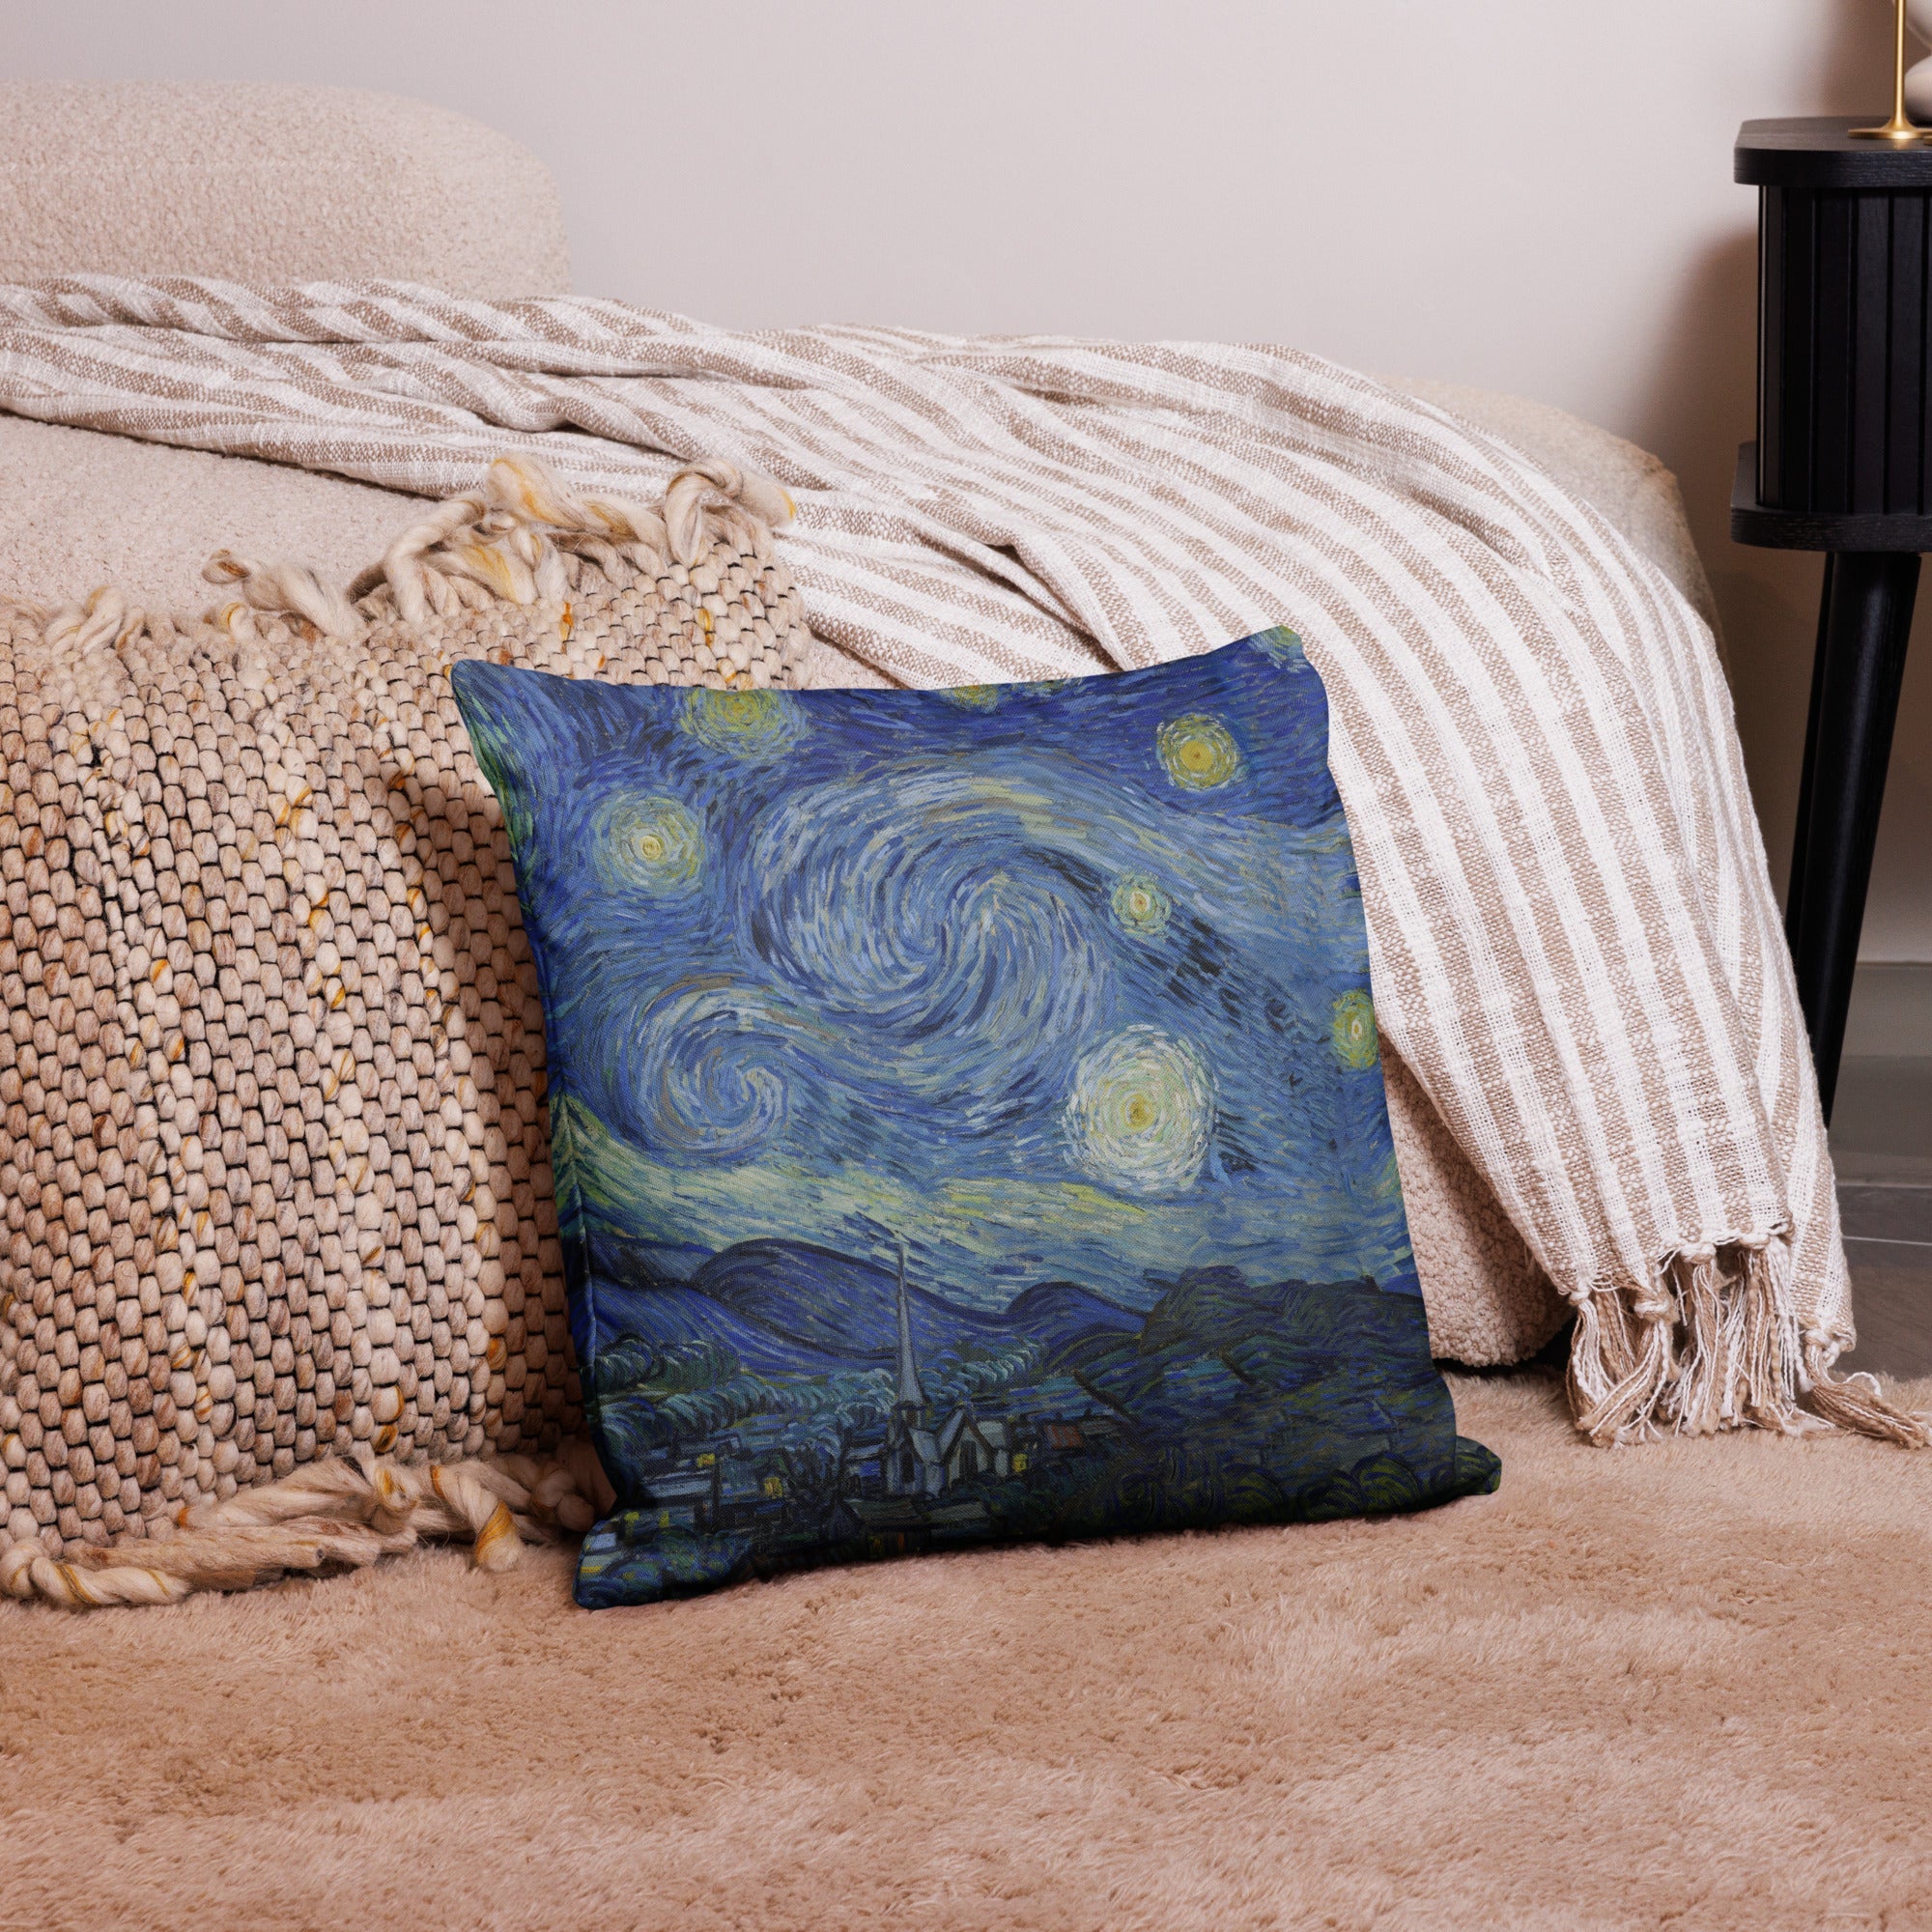 Vincent van Gogh 'Starry Night' Famous Painting Premium Pillow | Premium Art Cushion